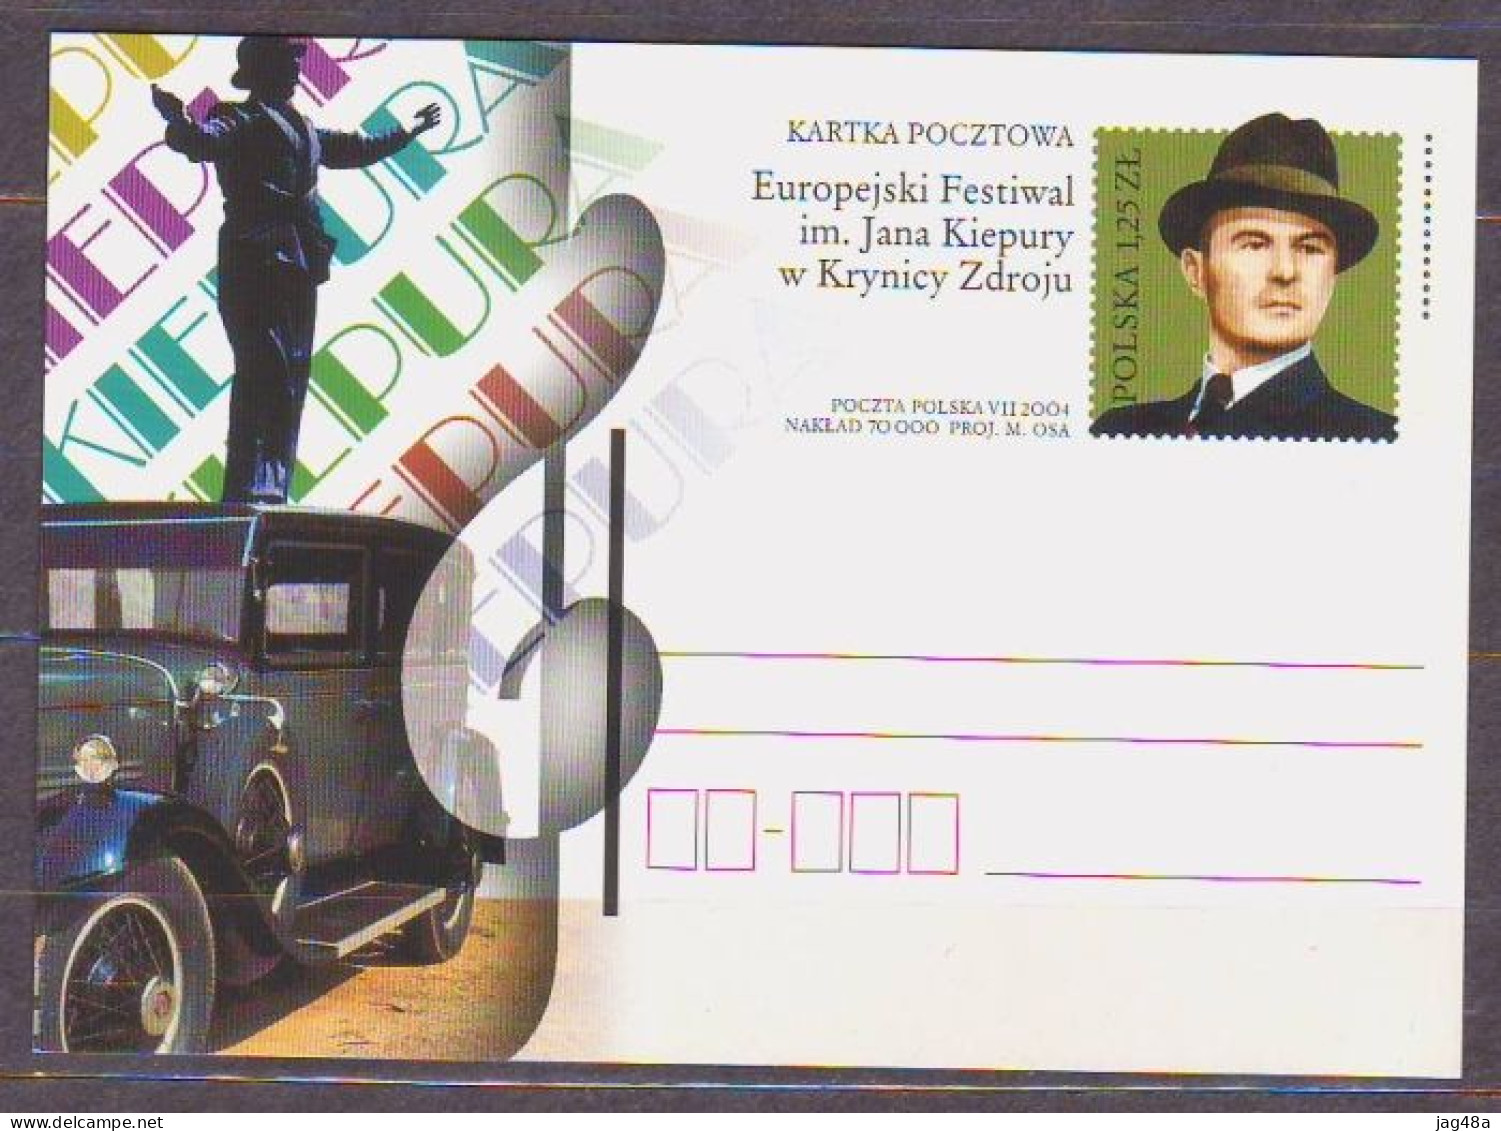 POLAND..2004/Jan Kiepura - European Singers Festival/Krynica Zdroj .. PostCard/unused. - Covers & Documents